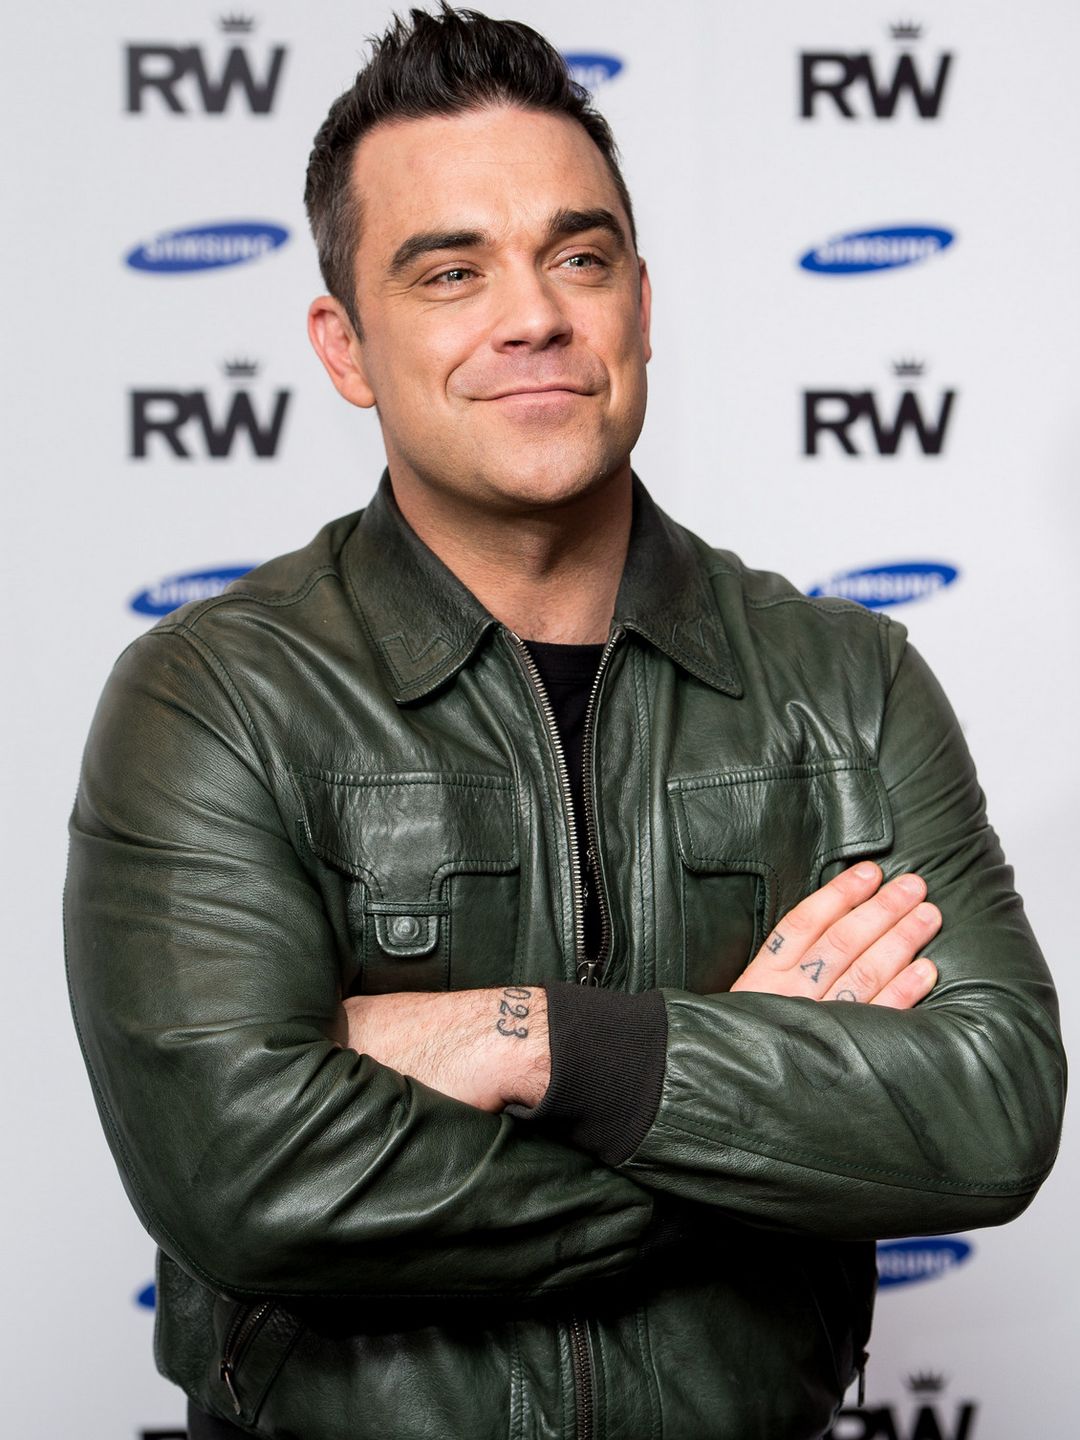 Robbie Williams personal traits